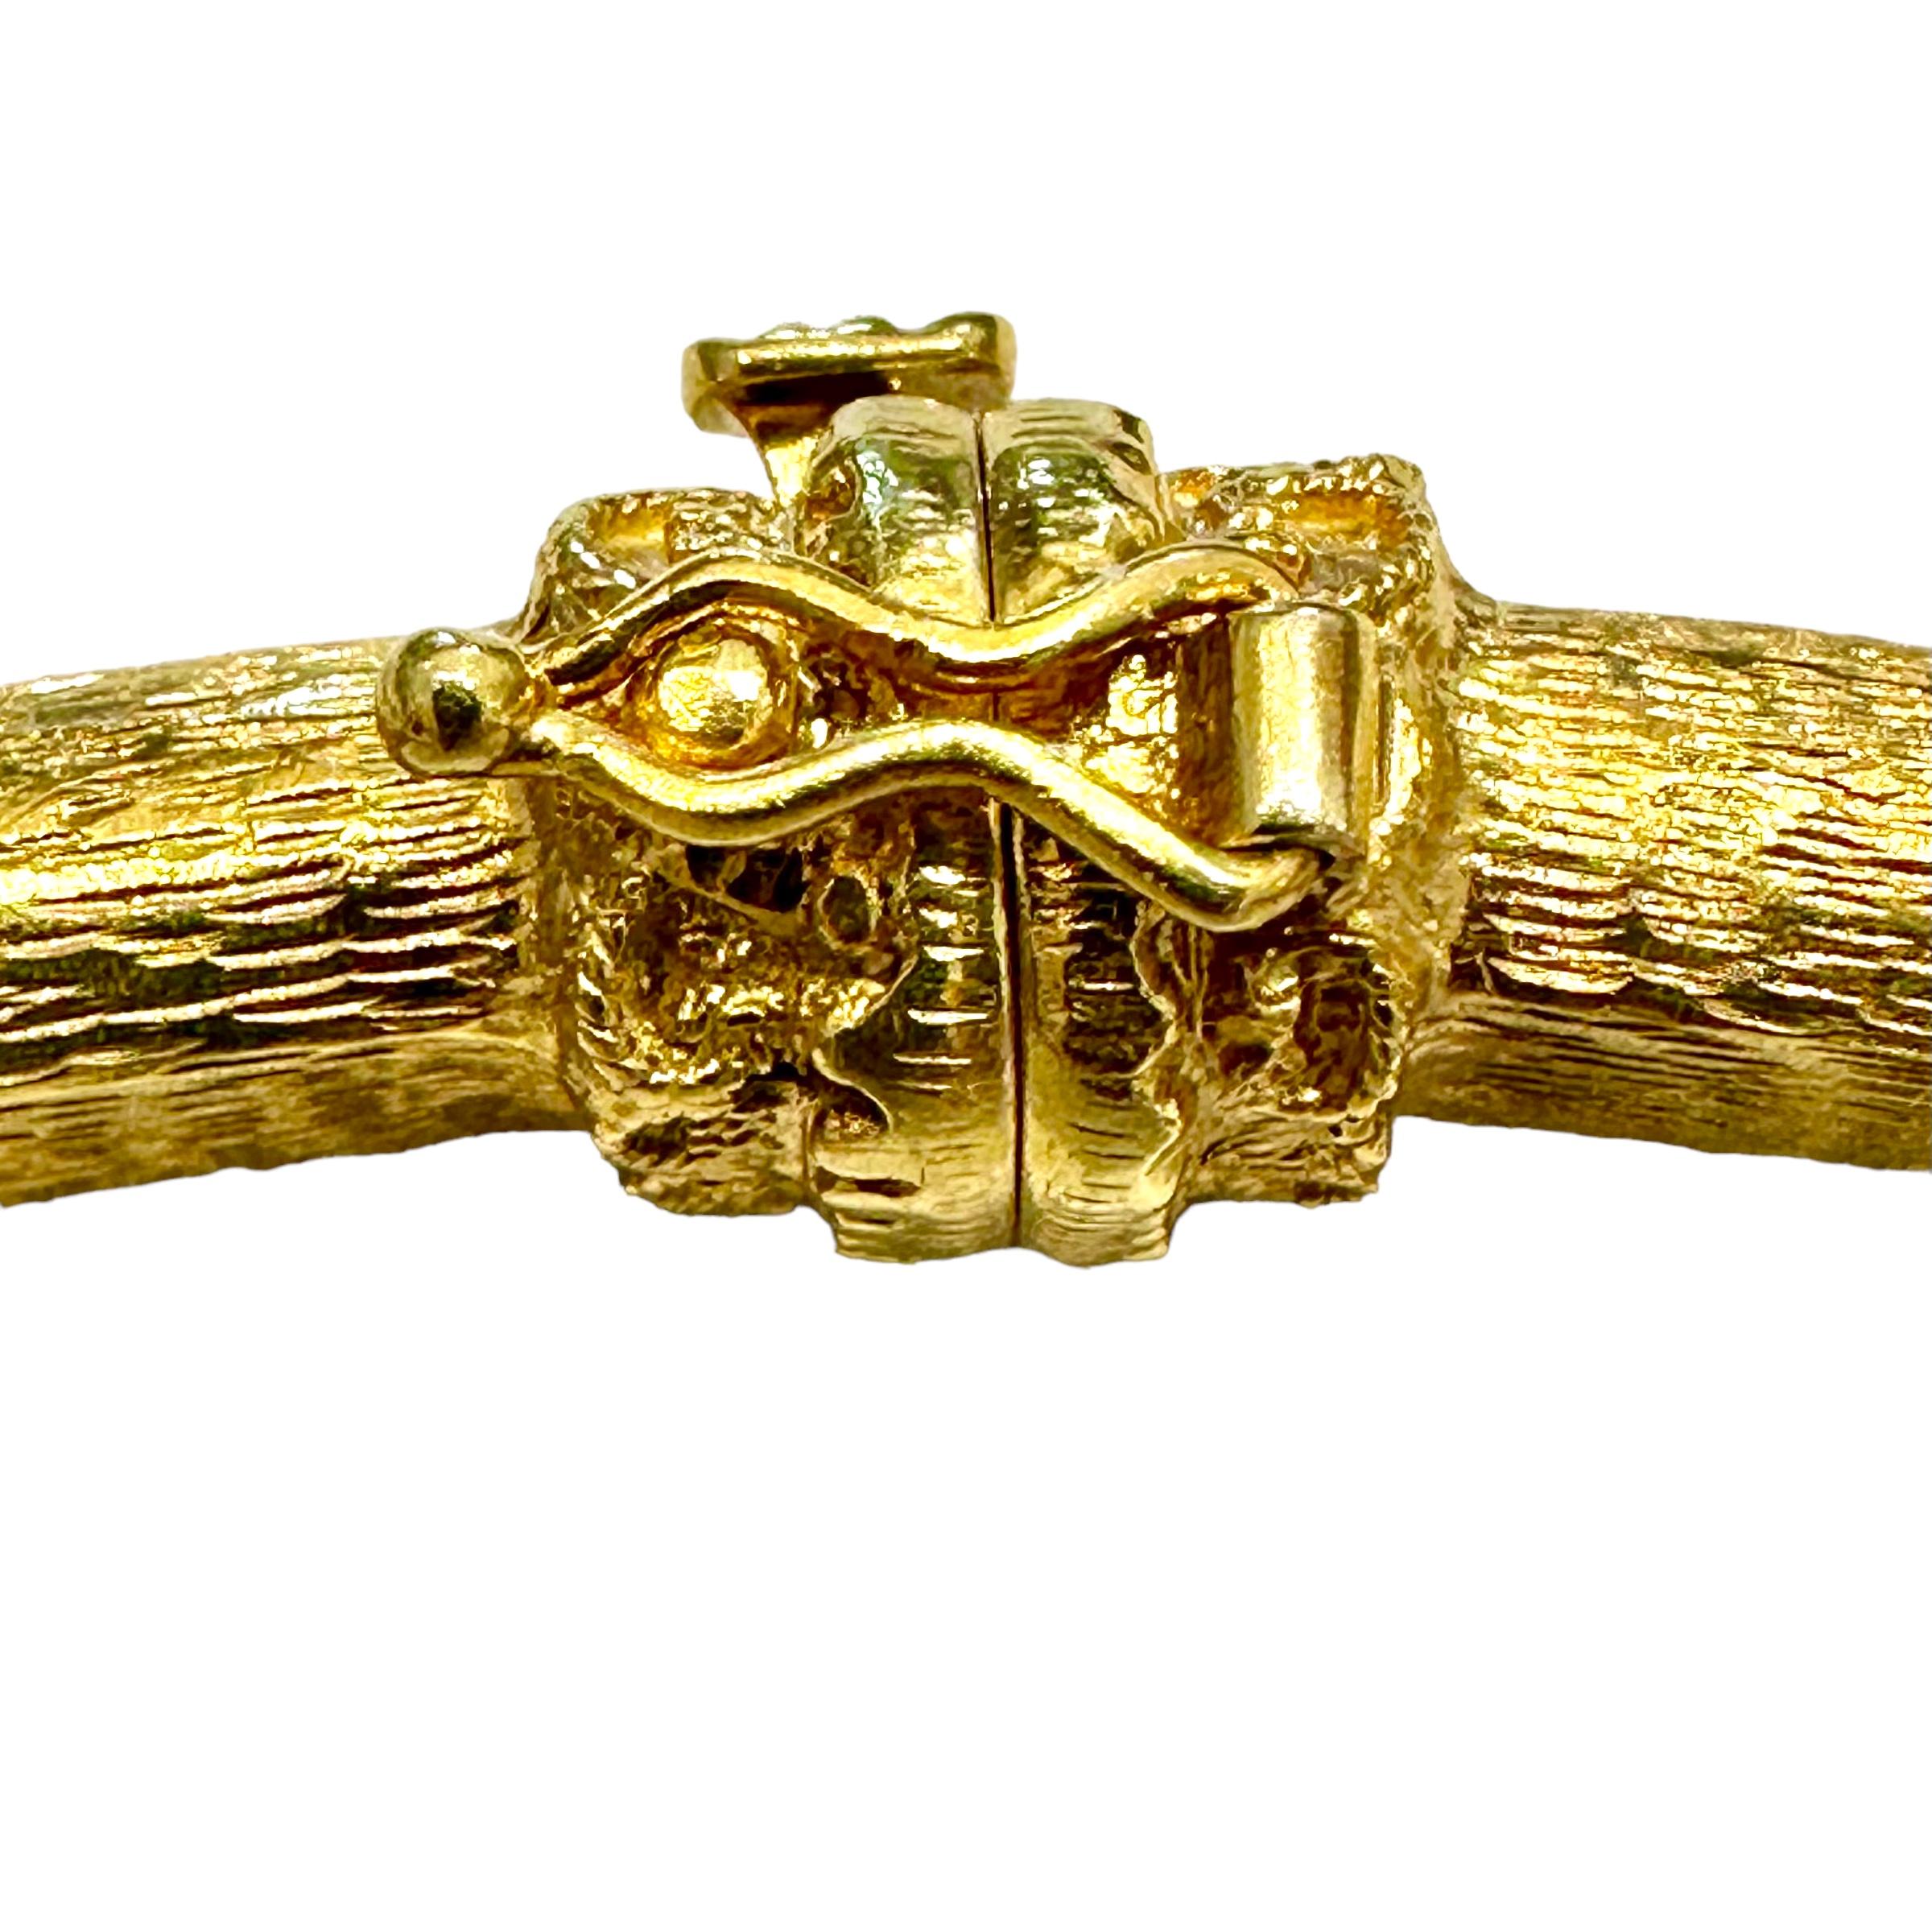 Monumentale Lalaounis 18k Gold Doppelter Widderkopf-Halskette in Monumentalgröße 38 Zoll lang im Angebot 6